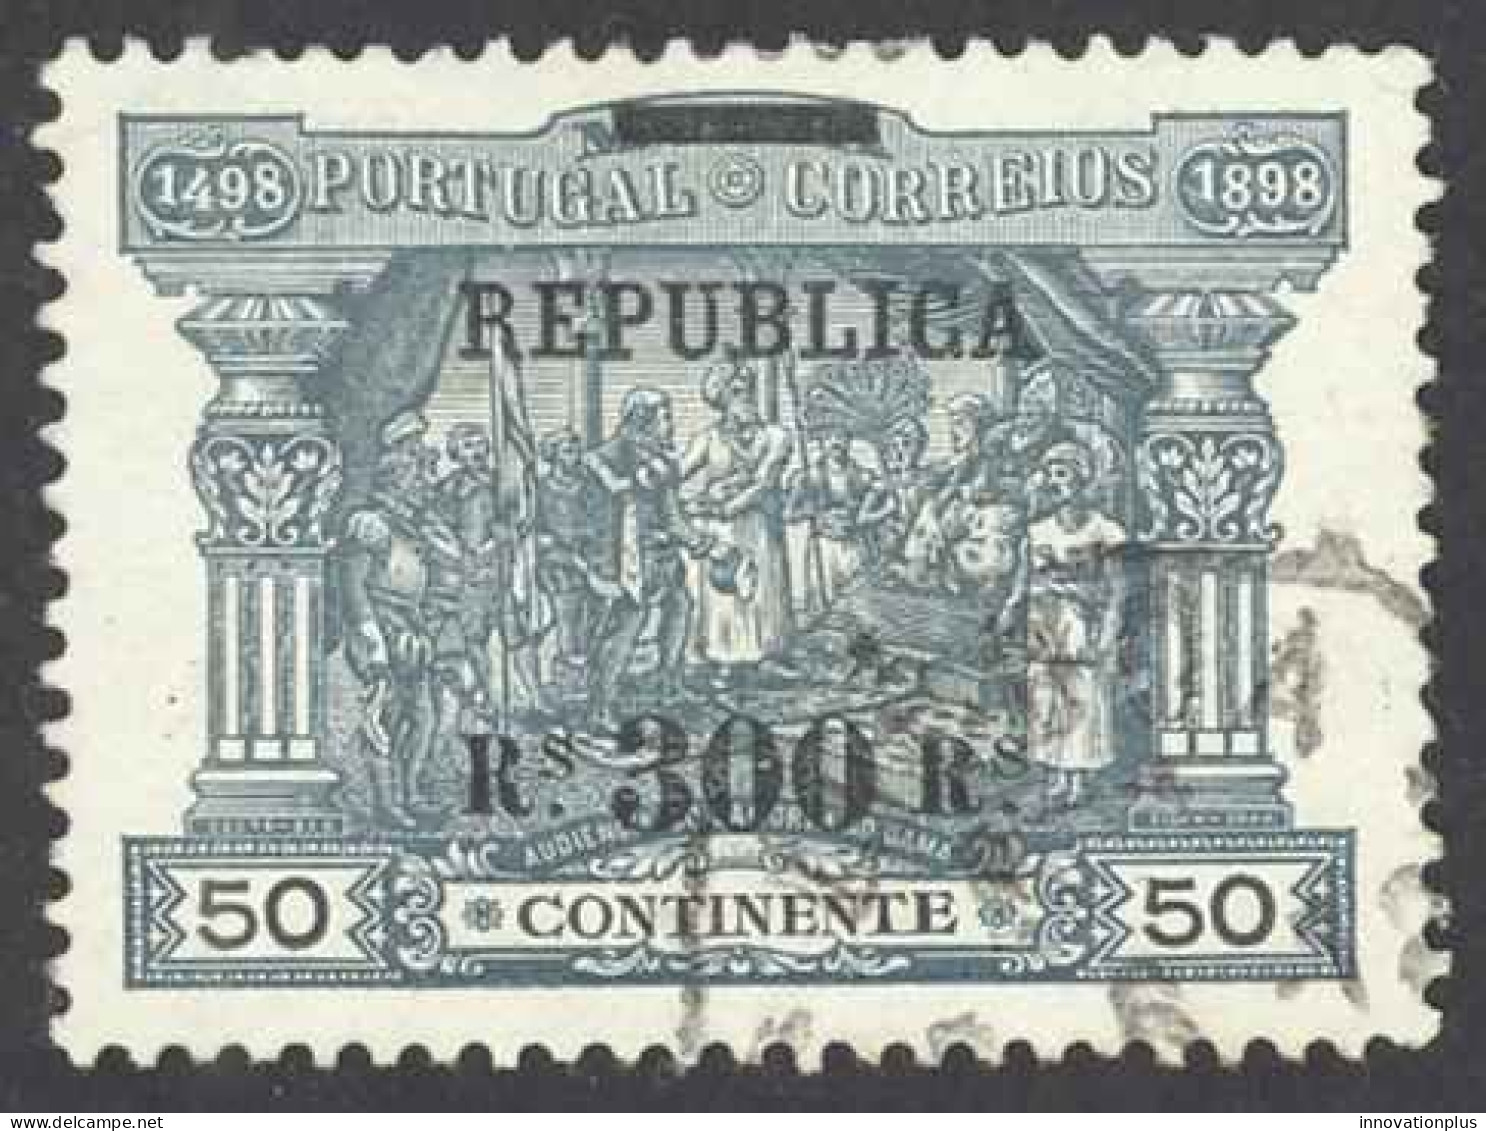 Portugal Sc# 197 Used (b) 1911 300r On 50r Overprint Postage Due - Gebraucht